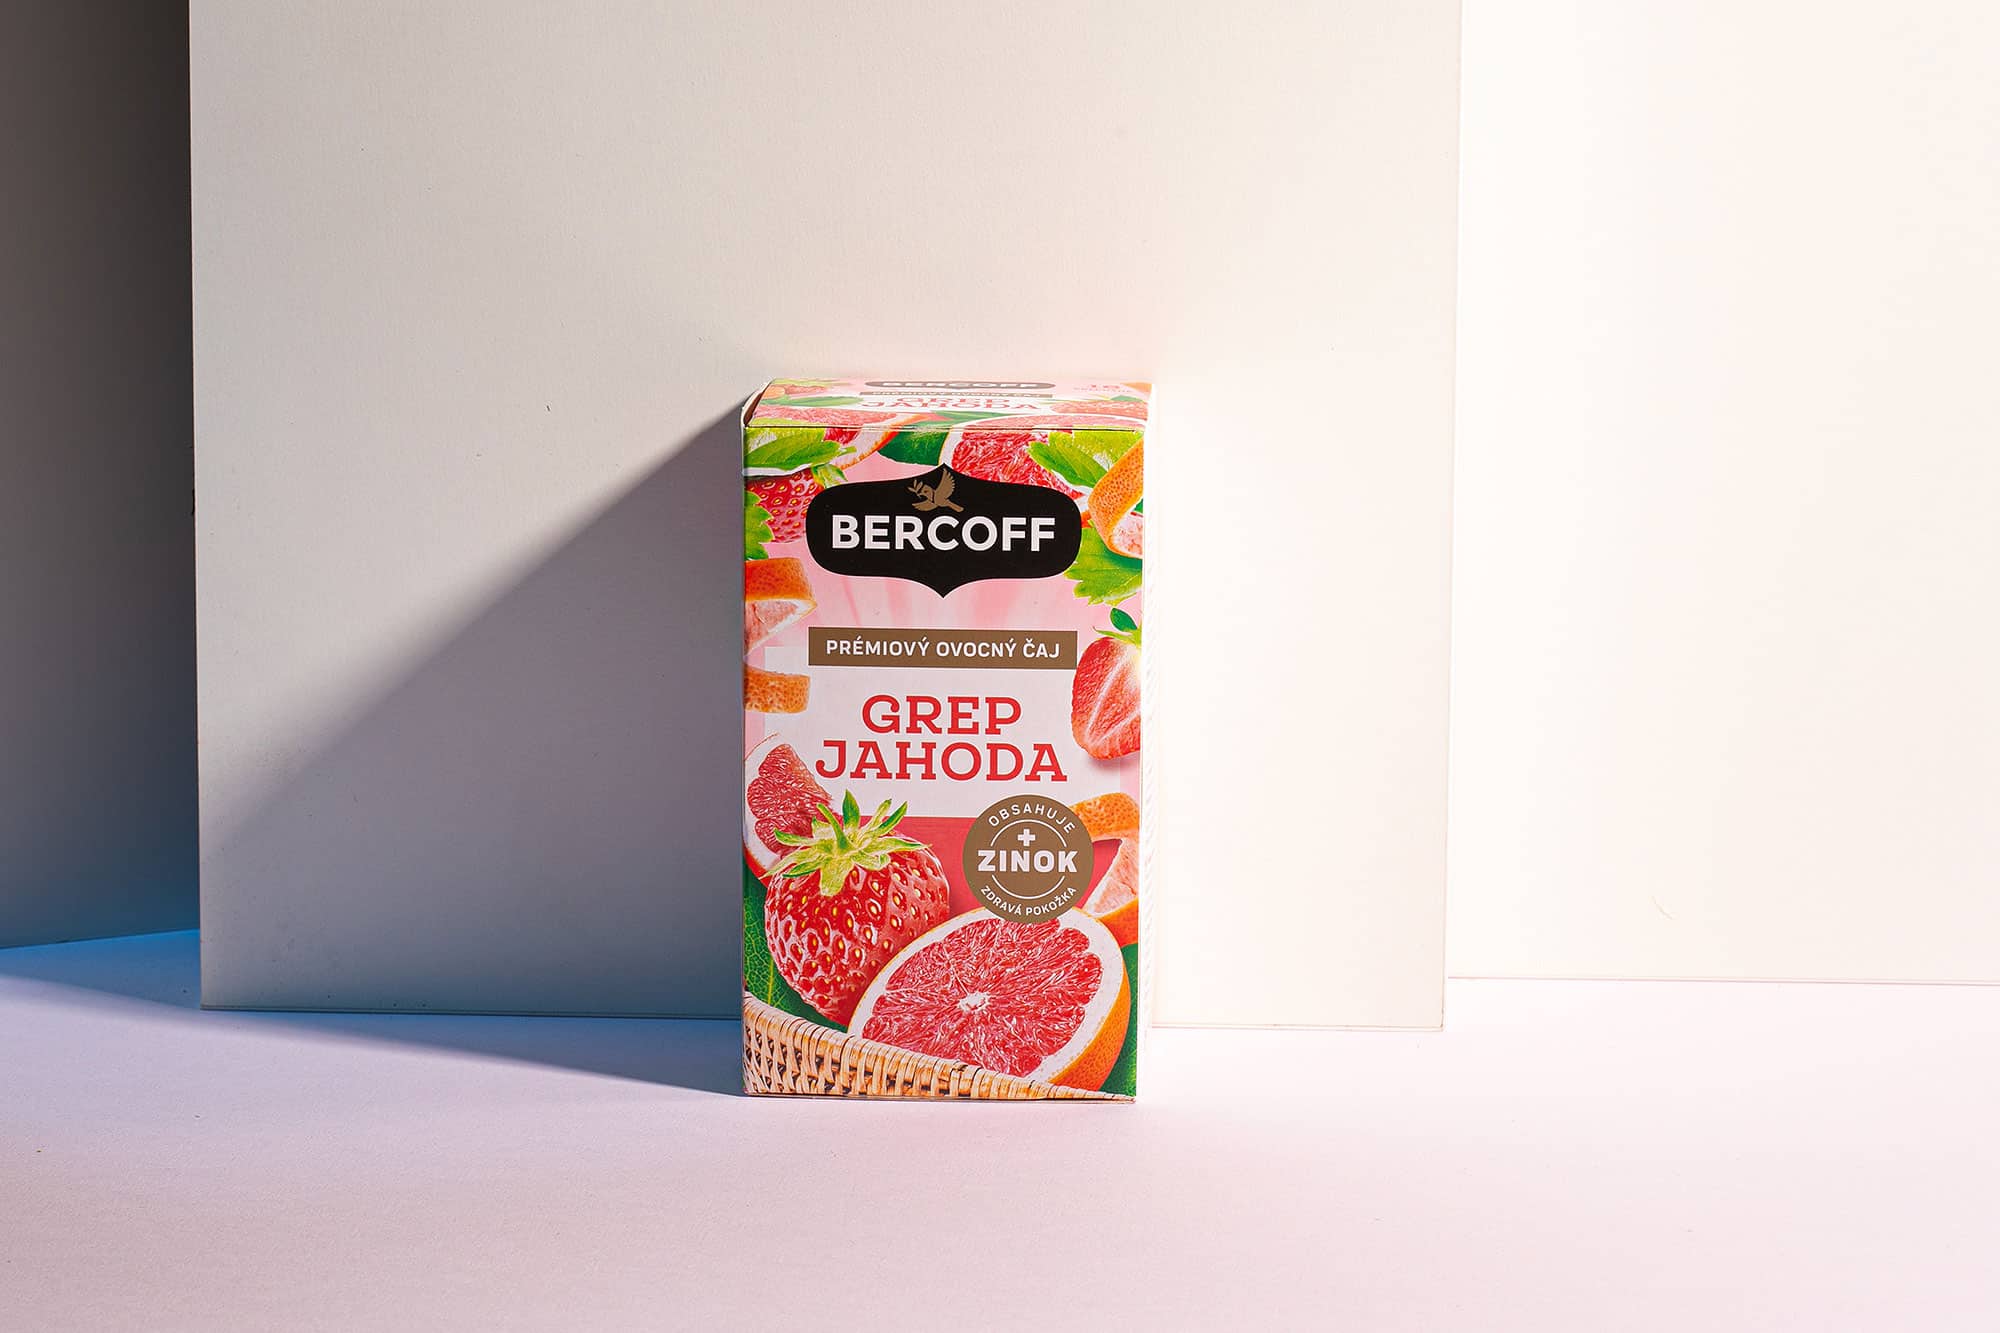 bercoff packaging